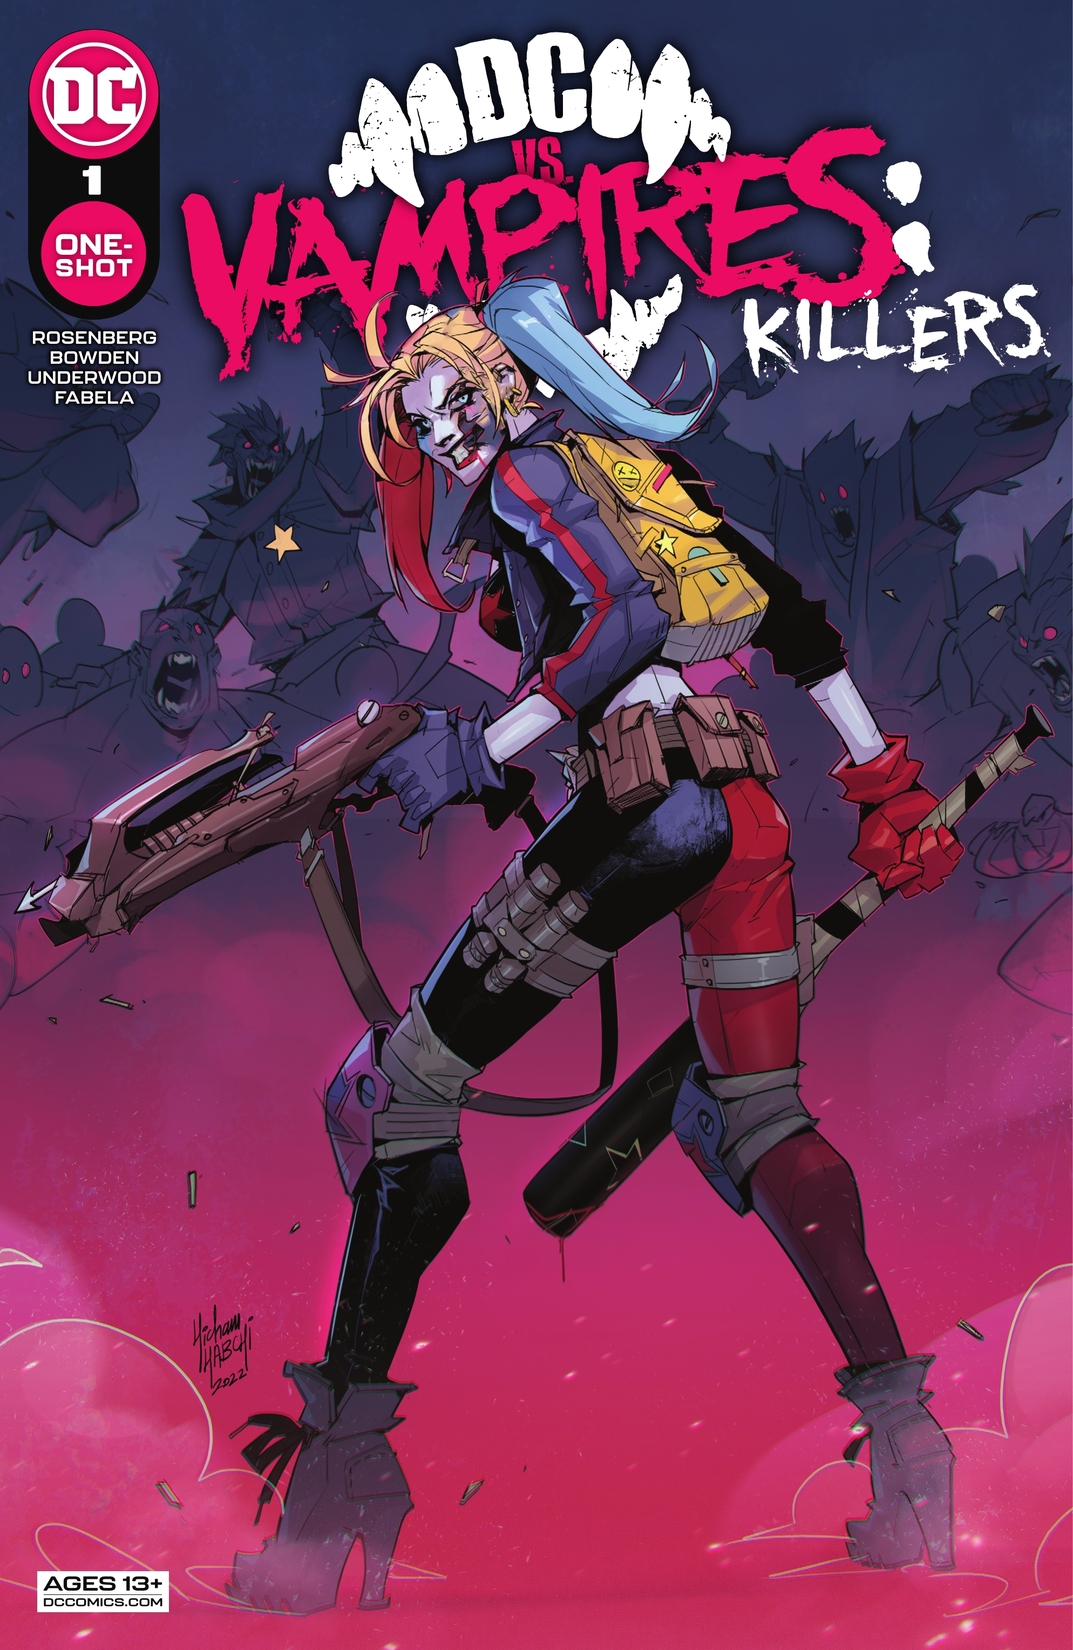 DC vs. Vampires - Killers #1 preview images